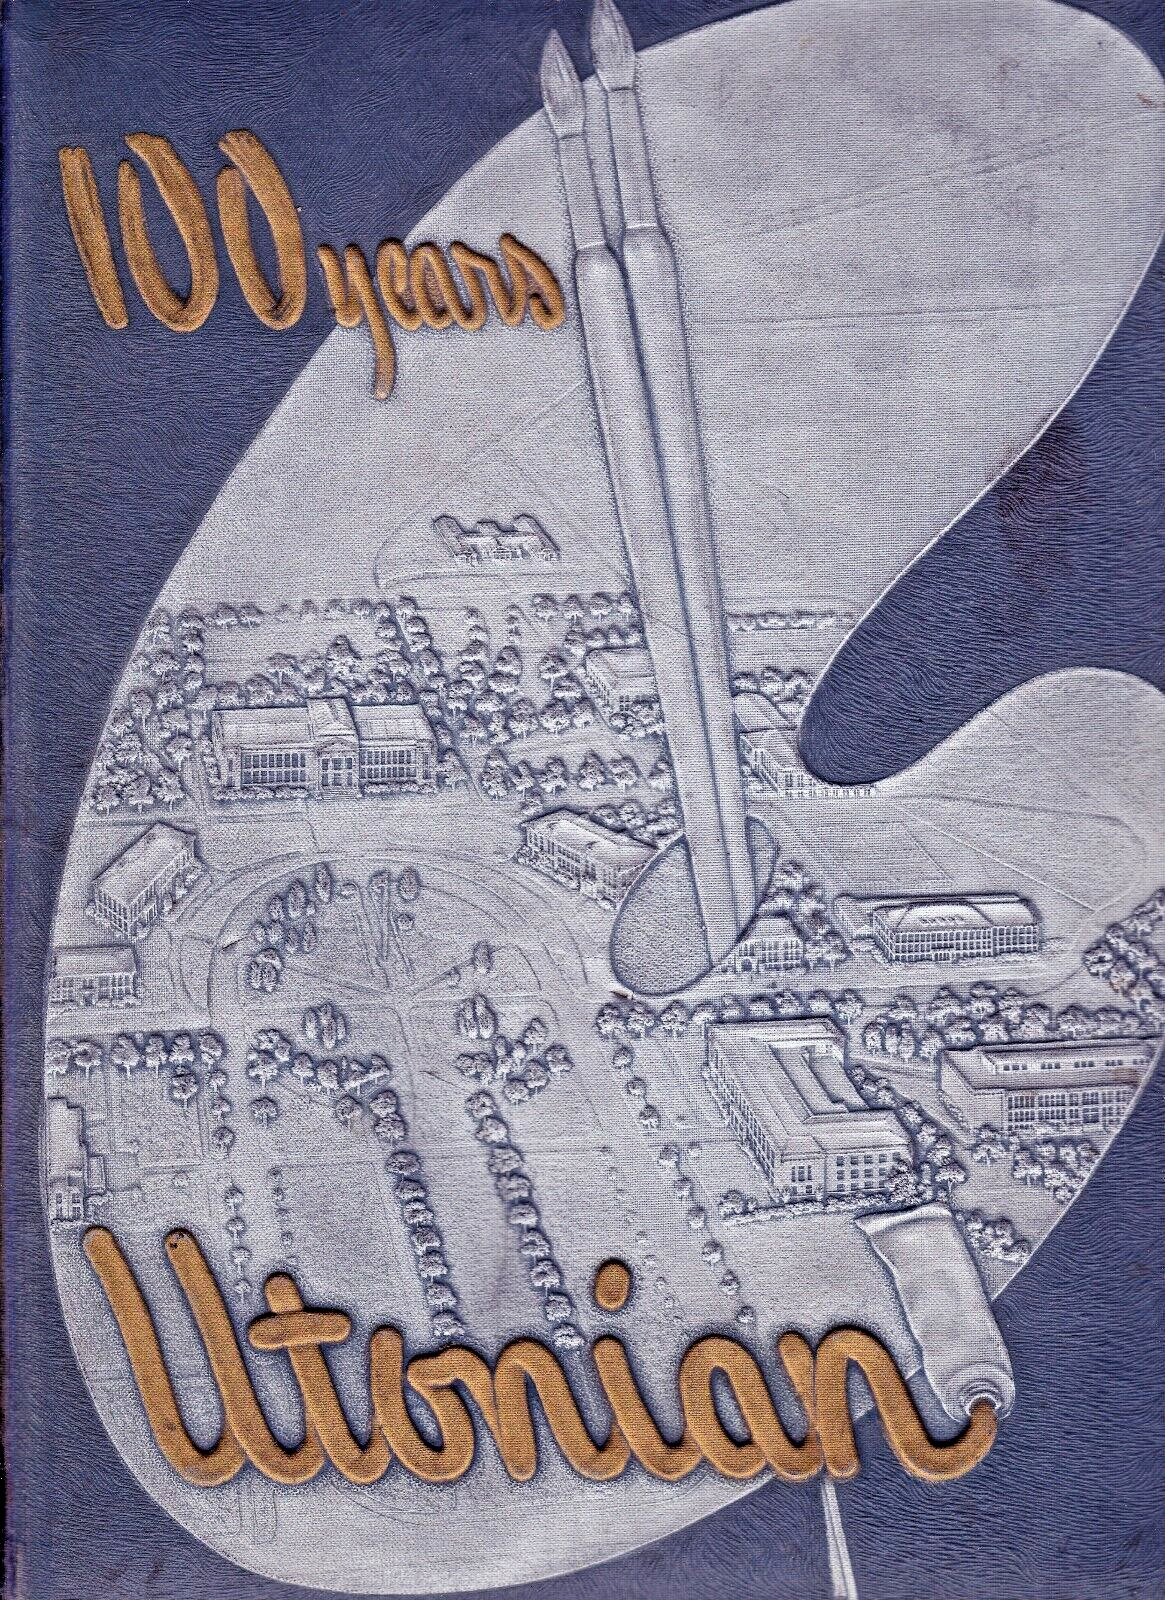 1950 University of Utah Yearbook, Centennial Issue, UTONIAN Salt Lake City, Utah